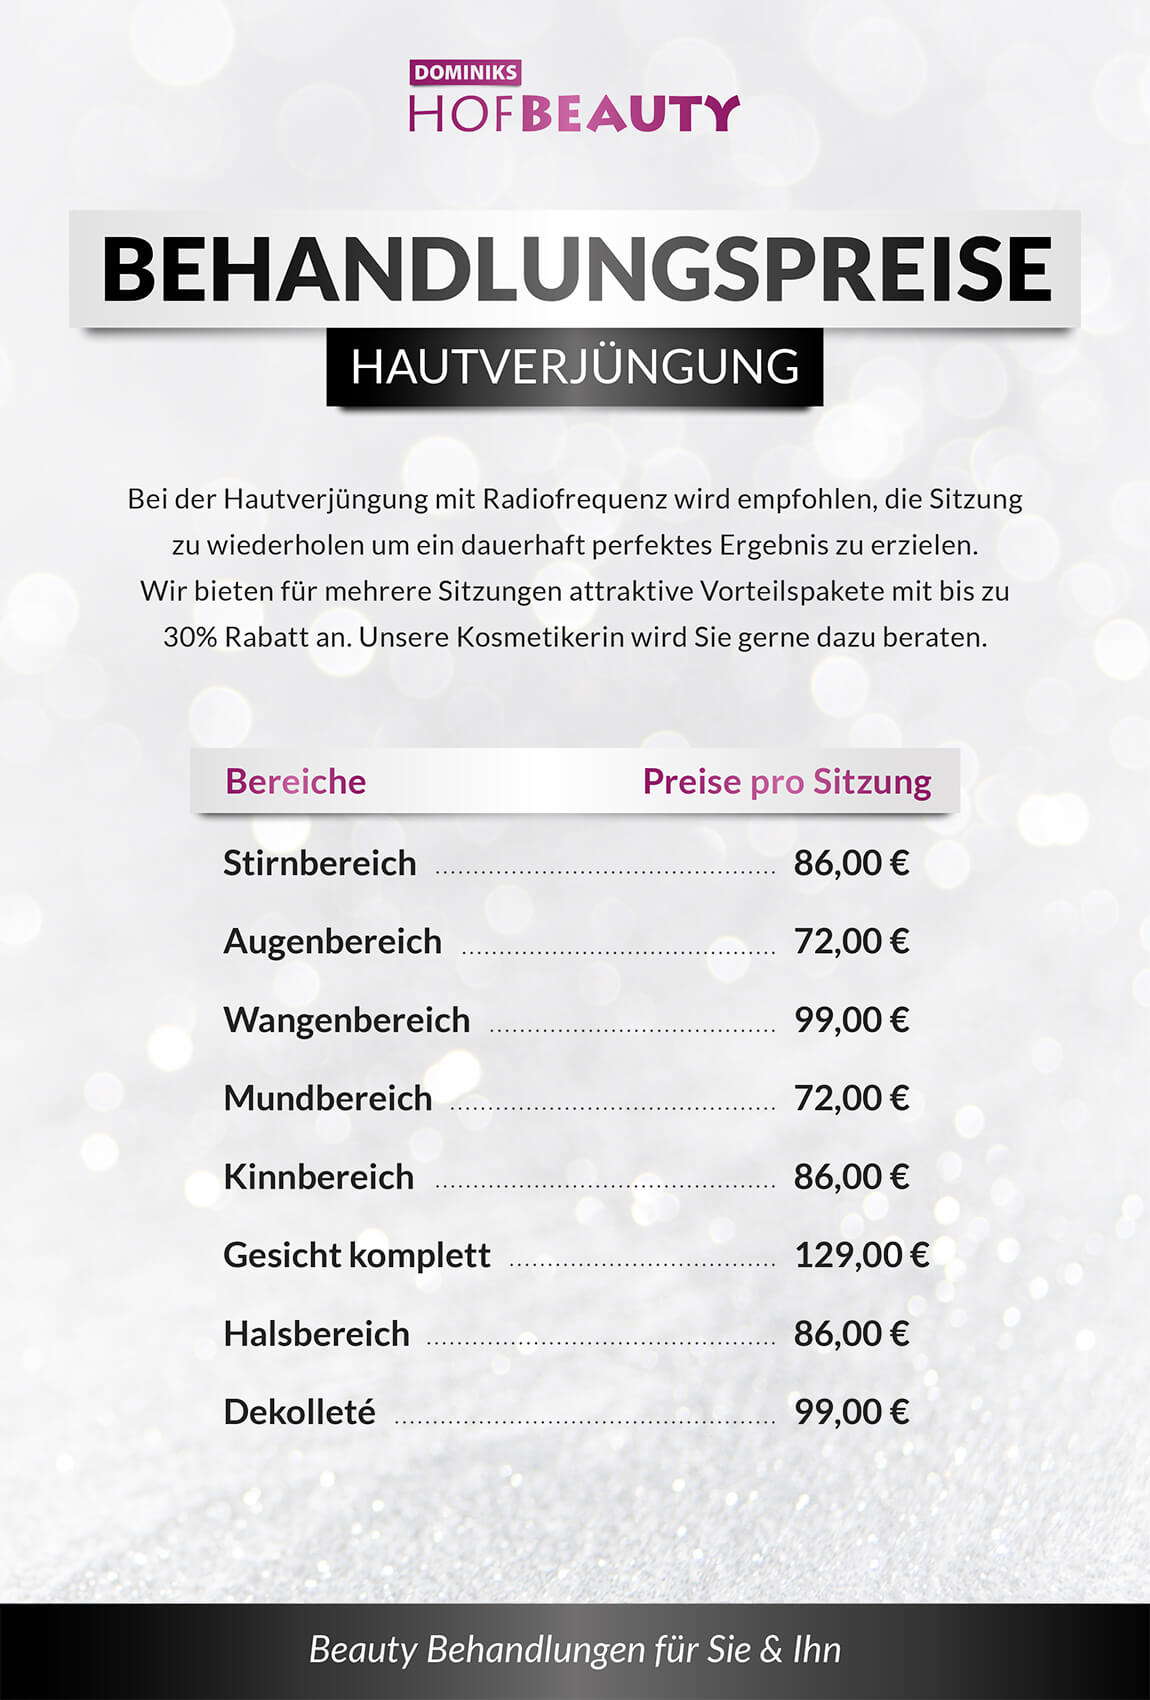 HofBeauty Behandlungspreise Preisliste Hautverjüngung